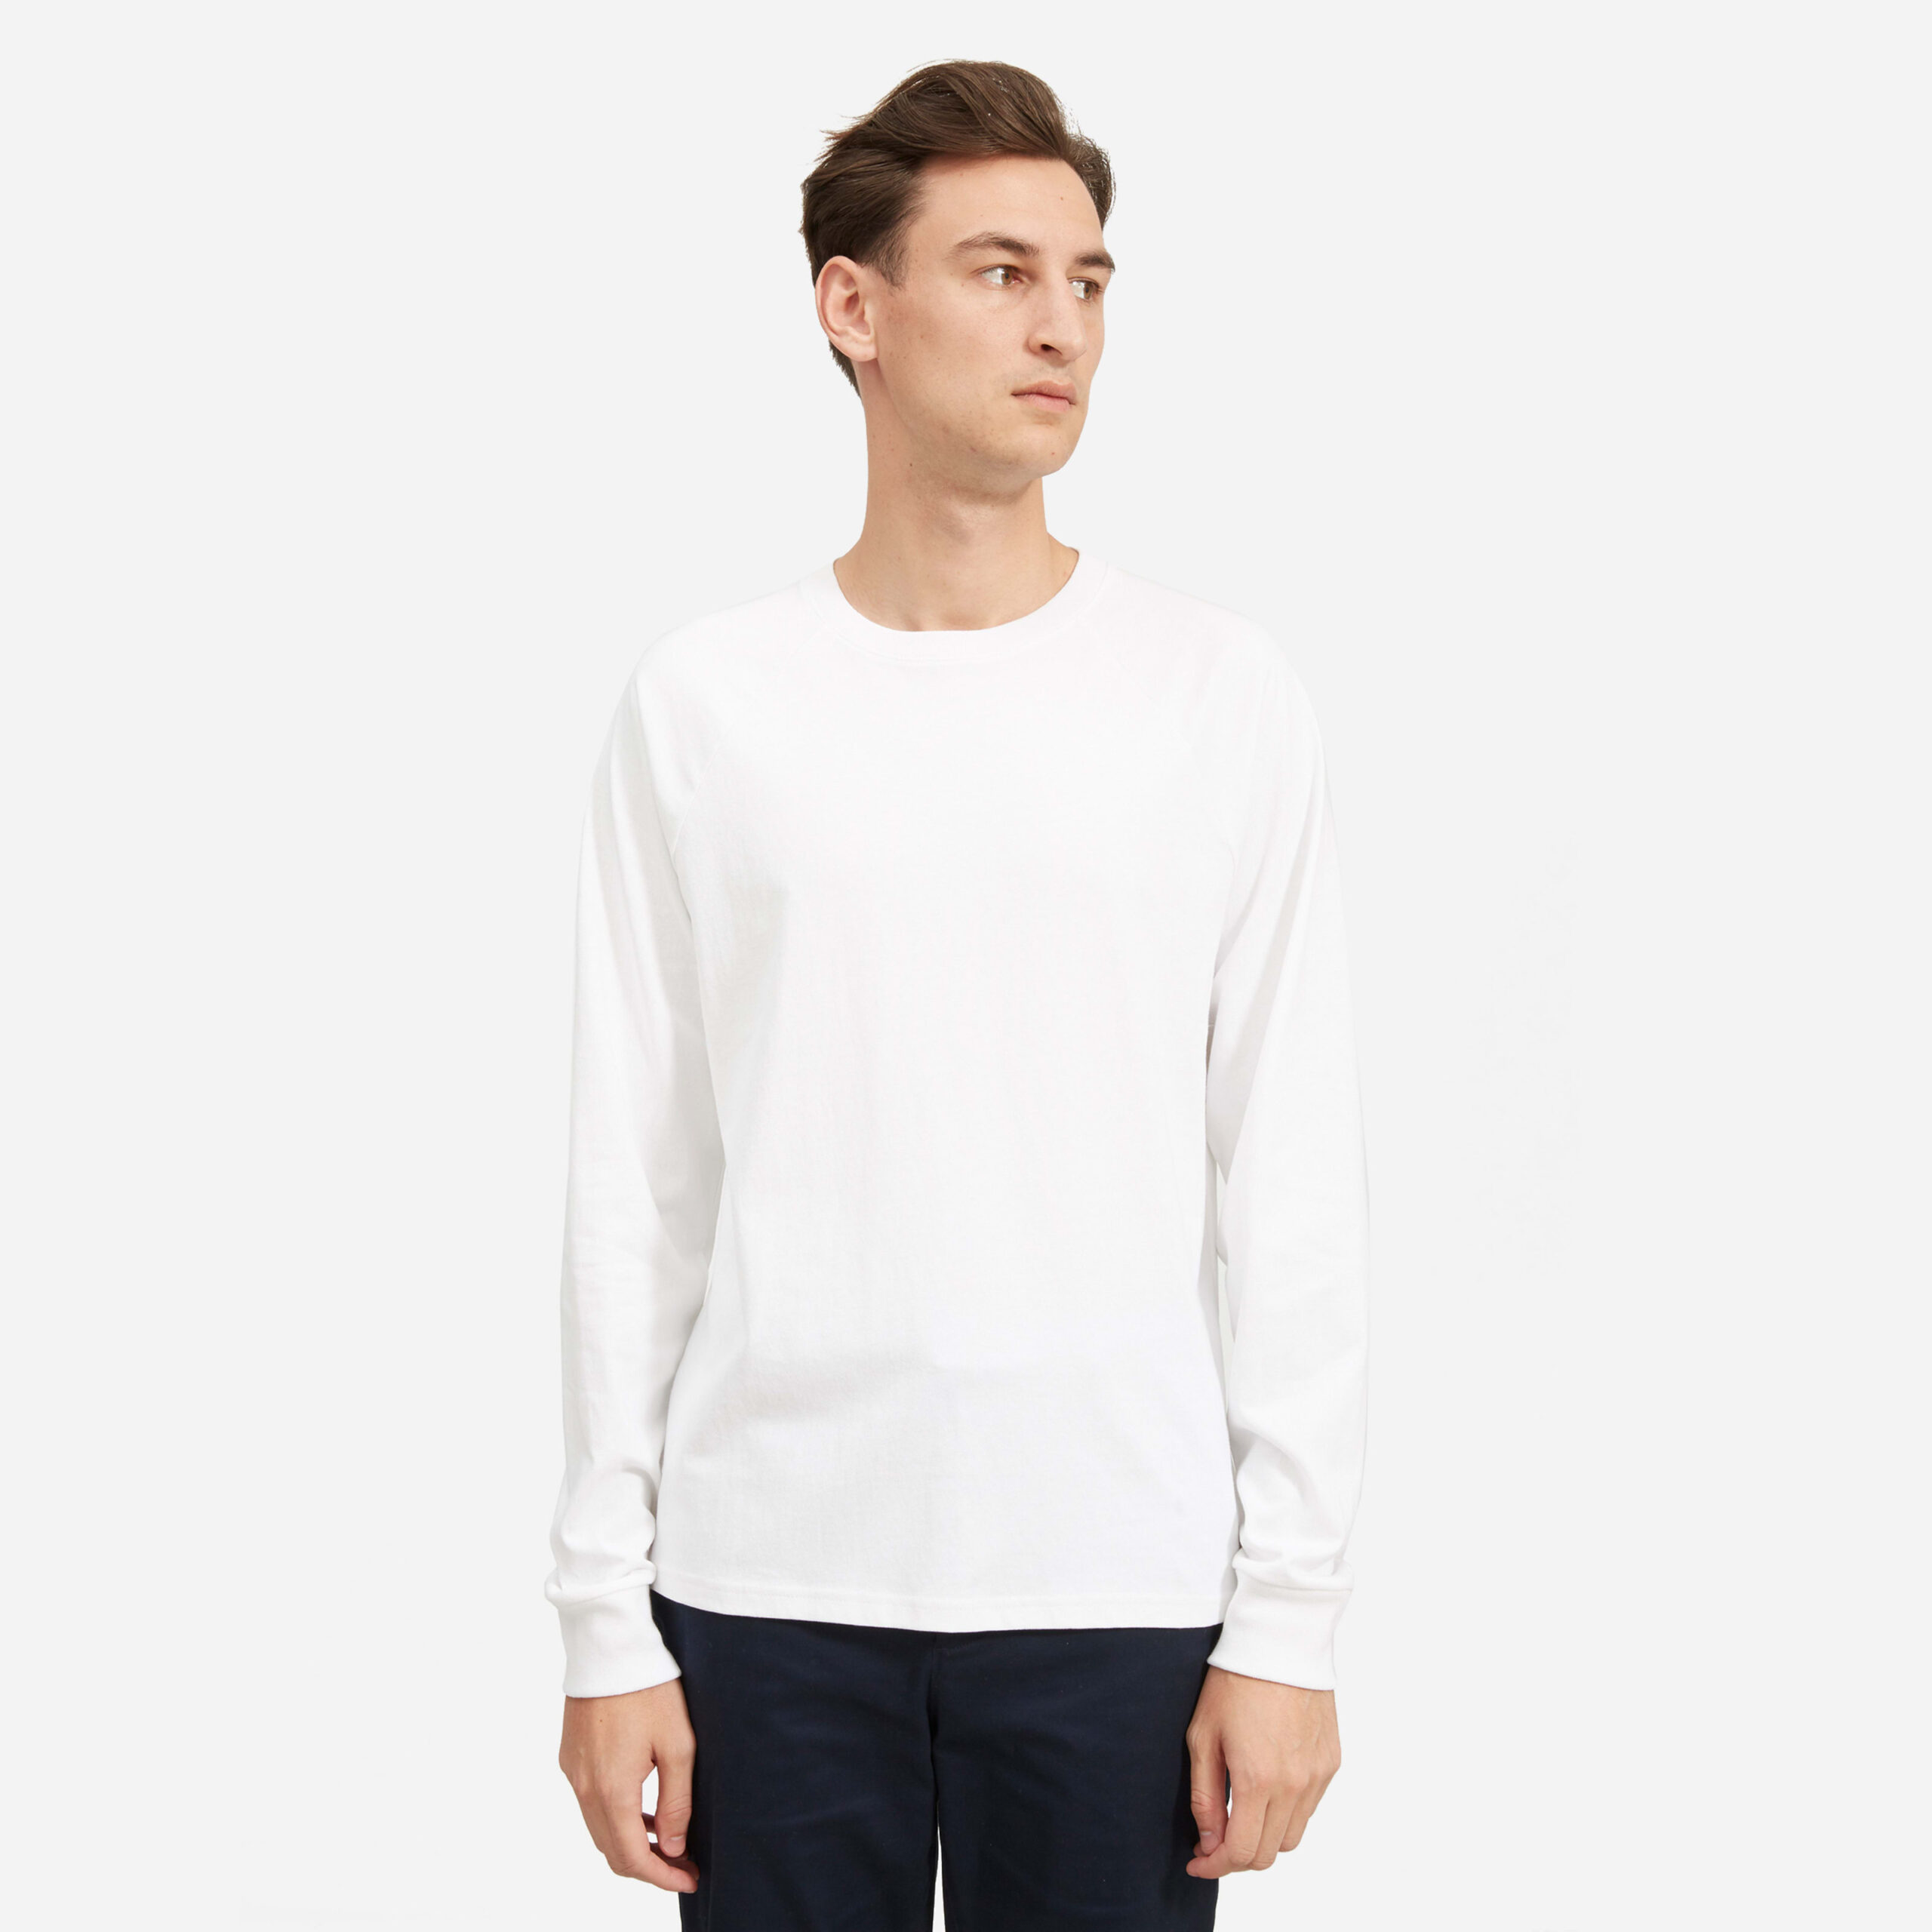 Men&#8217;s Premium-Weight Long-Sleeve Crew | Uniform T-Shirt by Everlane in White